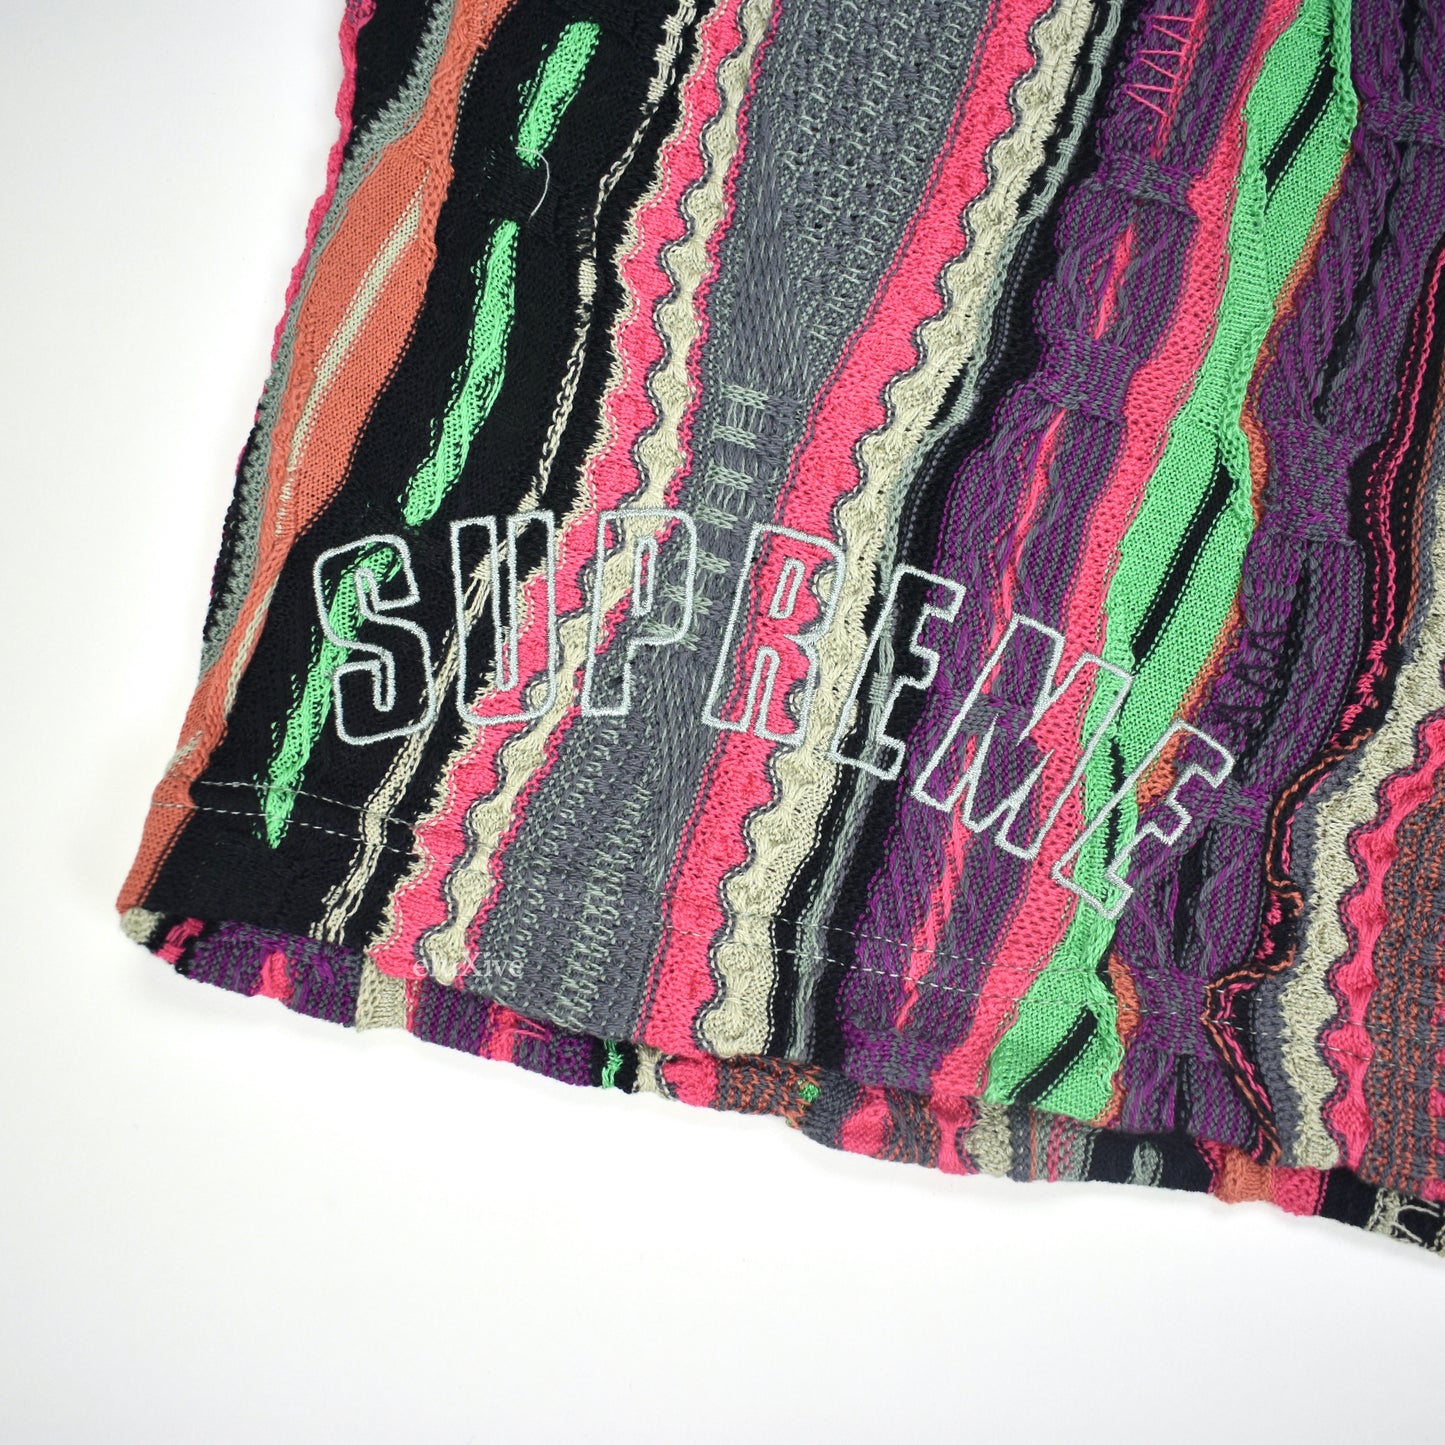 Supreme x Coogi - Multicolor Abstract Knit Basketball Shorts